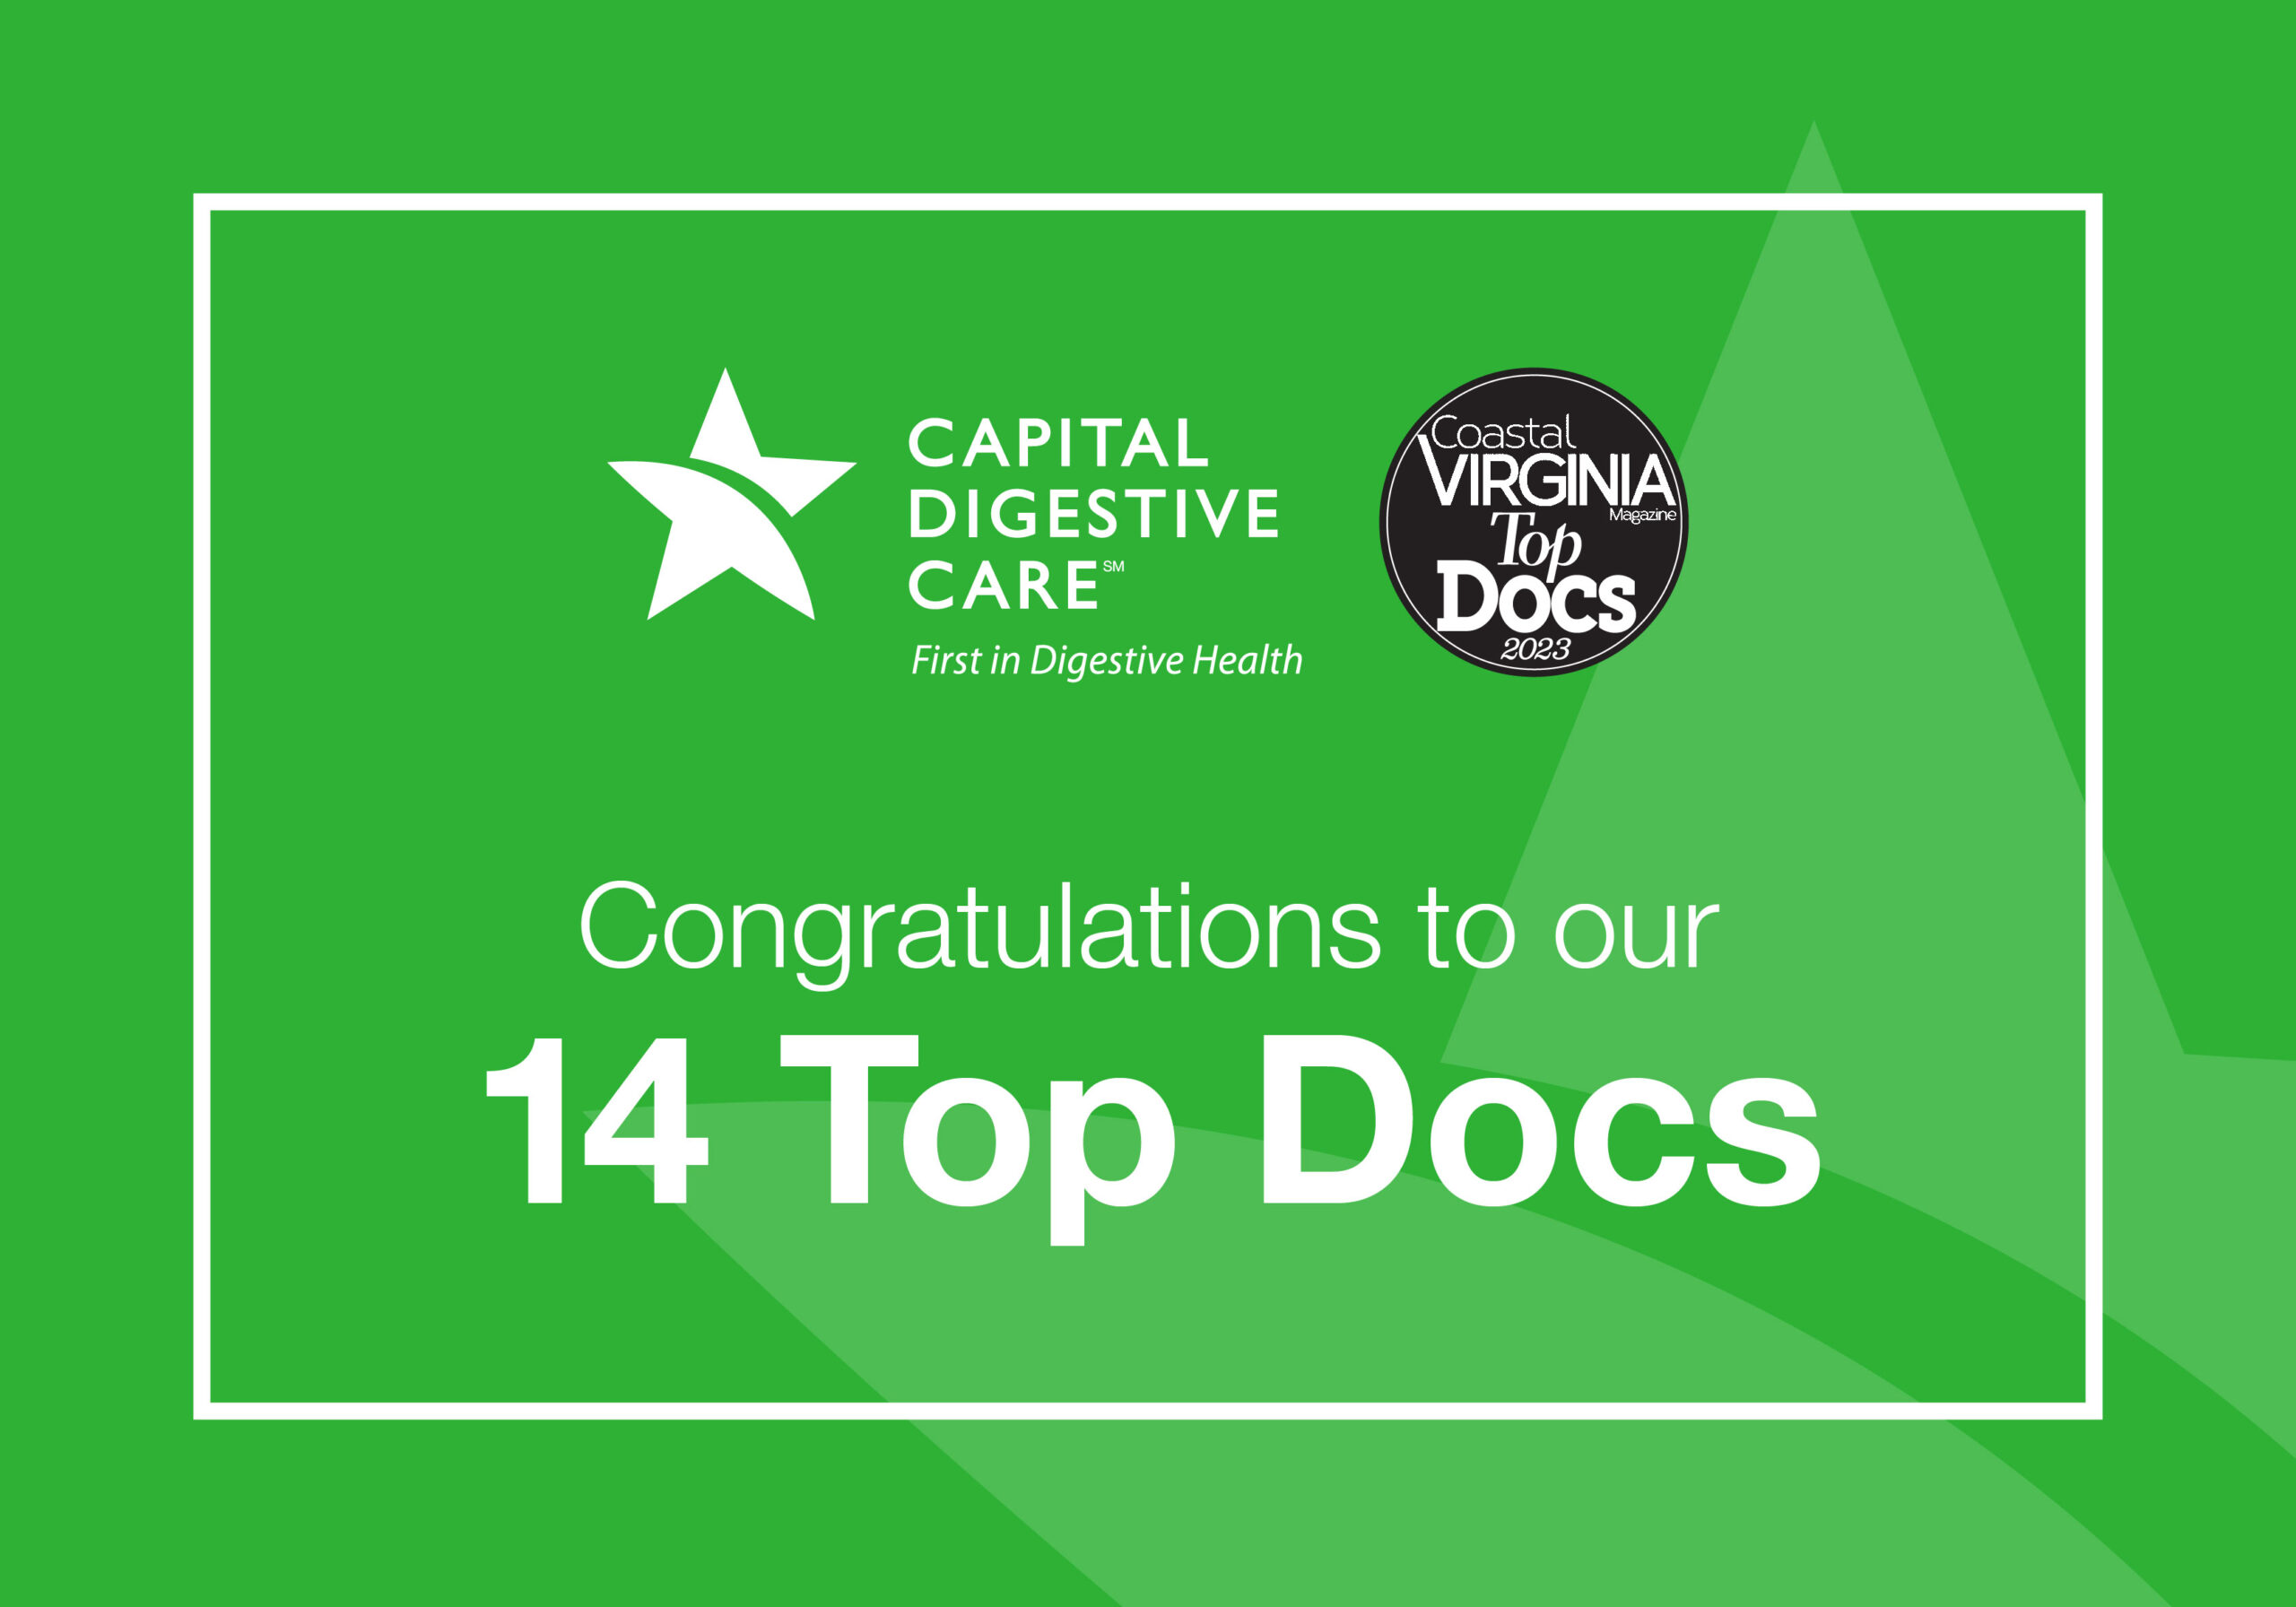 Coastal Virginia Magazine Names 14 Top Docs Capital Digestive Care